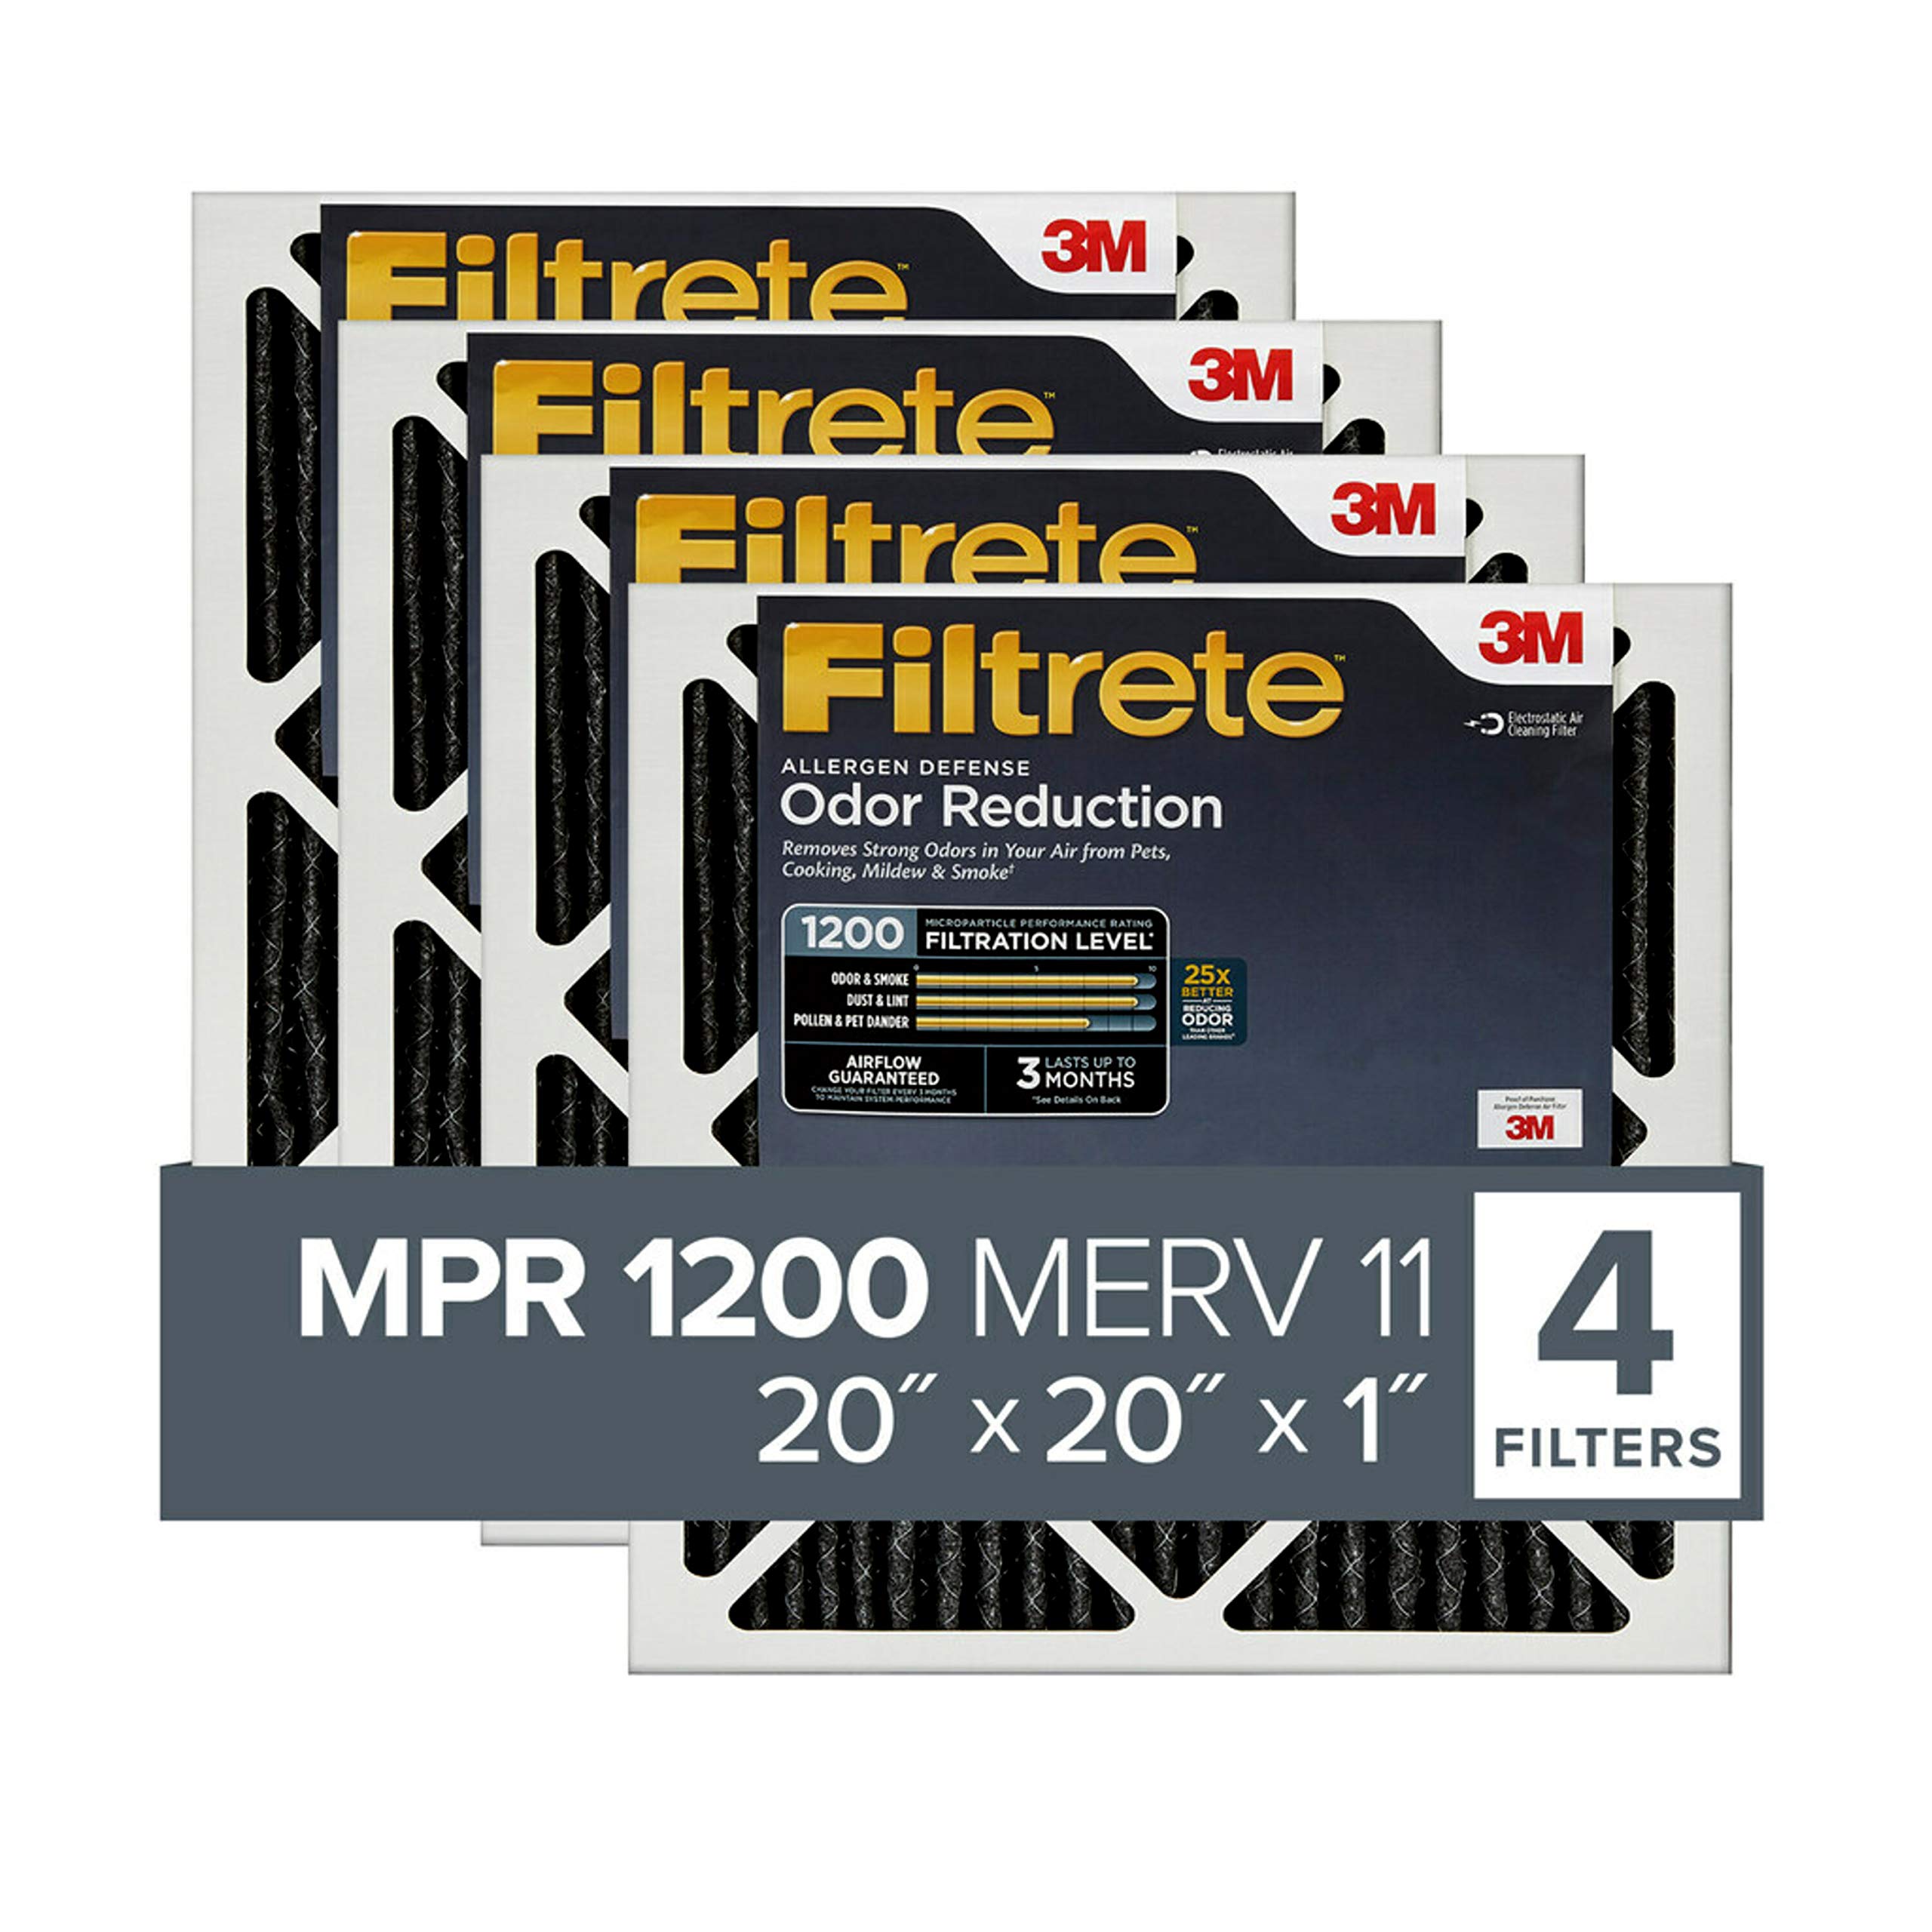 Filtrete 20x20x1 空气过滤器 MPR 1200 MERV 11，减少过敏原气味，4 件装（精确尺寸 19.69x19.69x0.81）